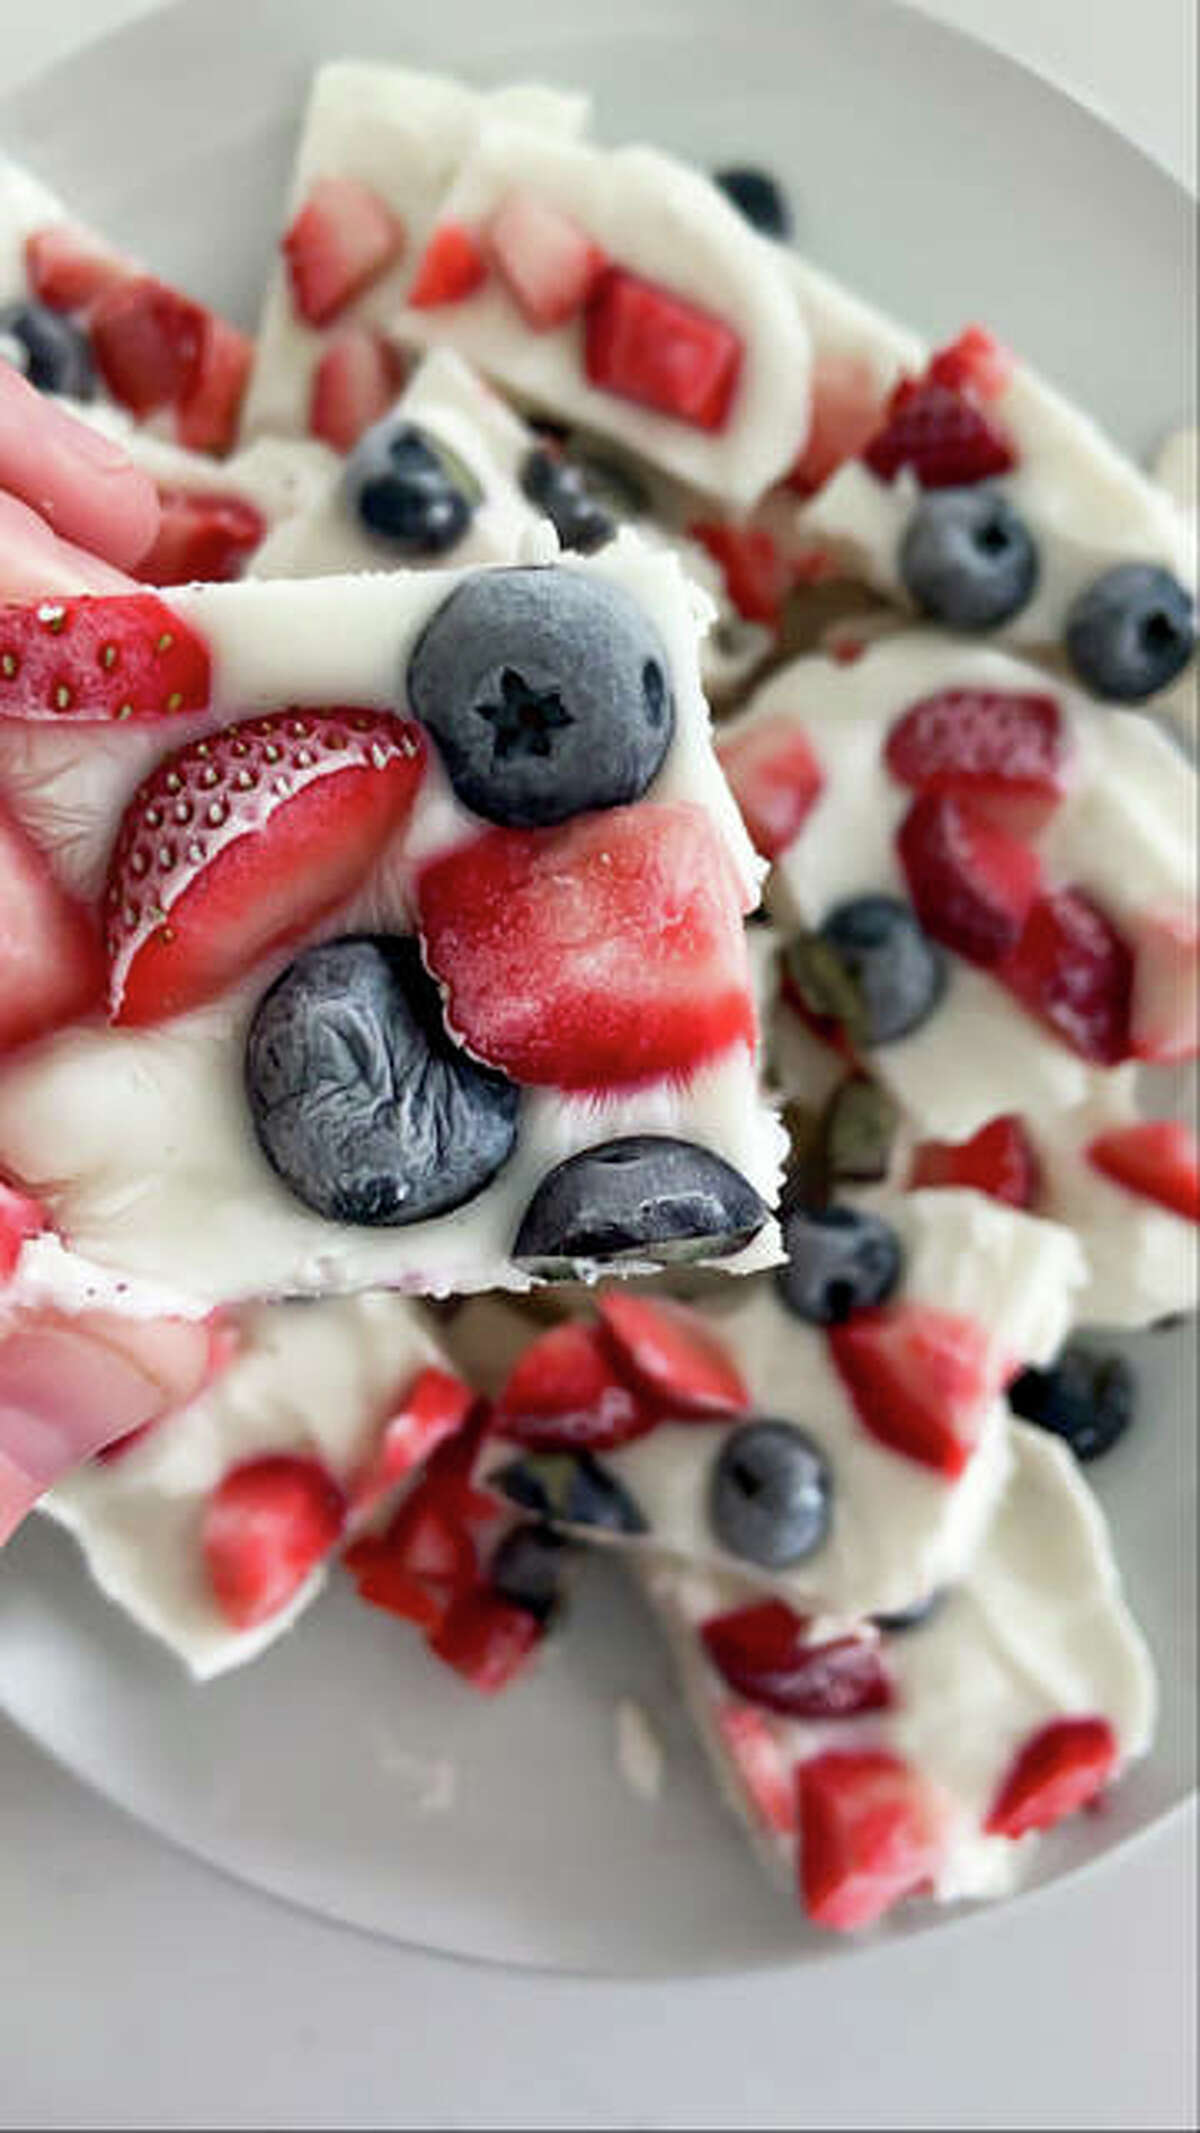 Greek Yogurt Berry Bars will be your new summer treat, says recipe creator Rachel Tritsch.